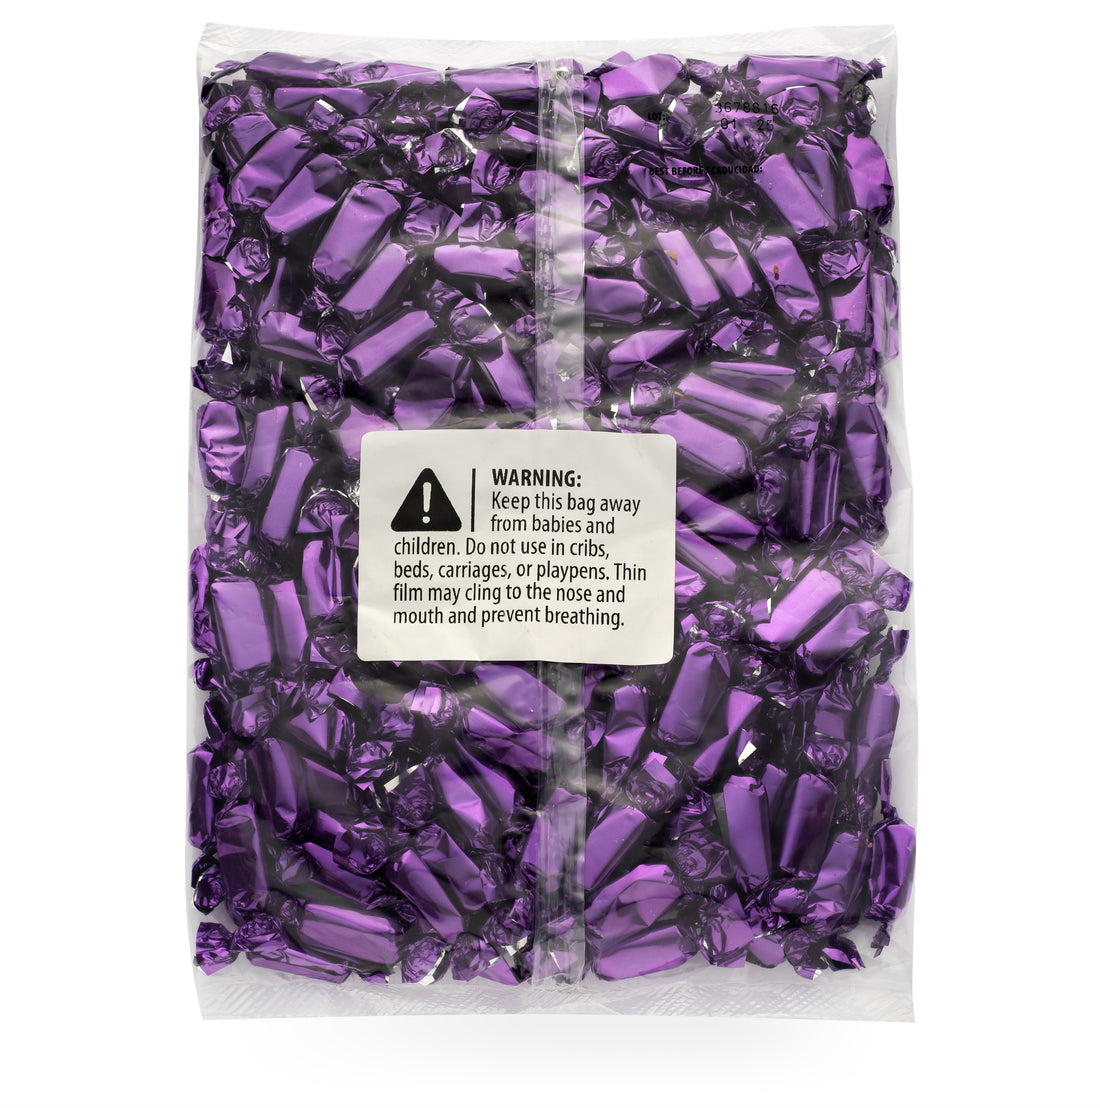 Purple Foil-Wrapped Wrapped Caramels - 2 lb Bag